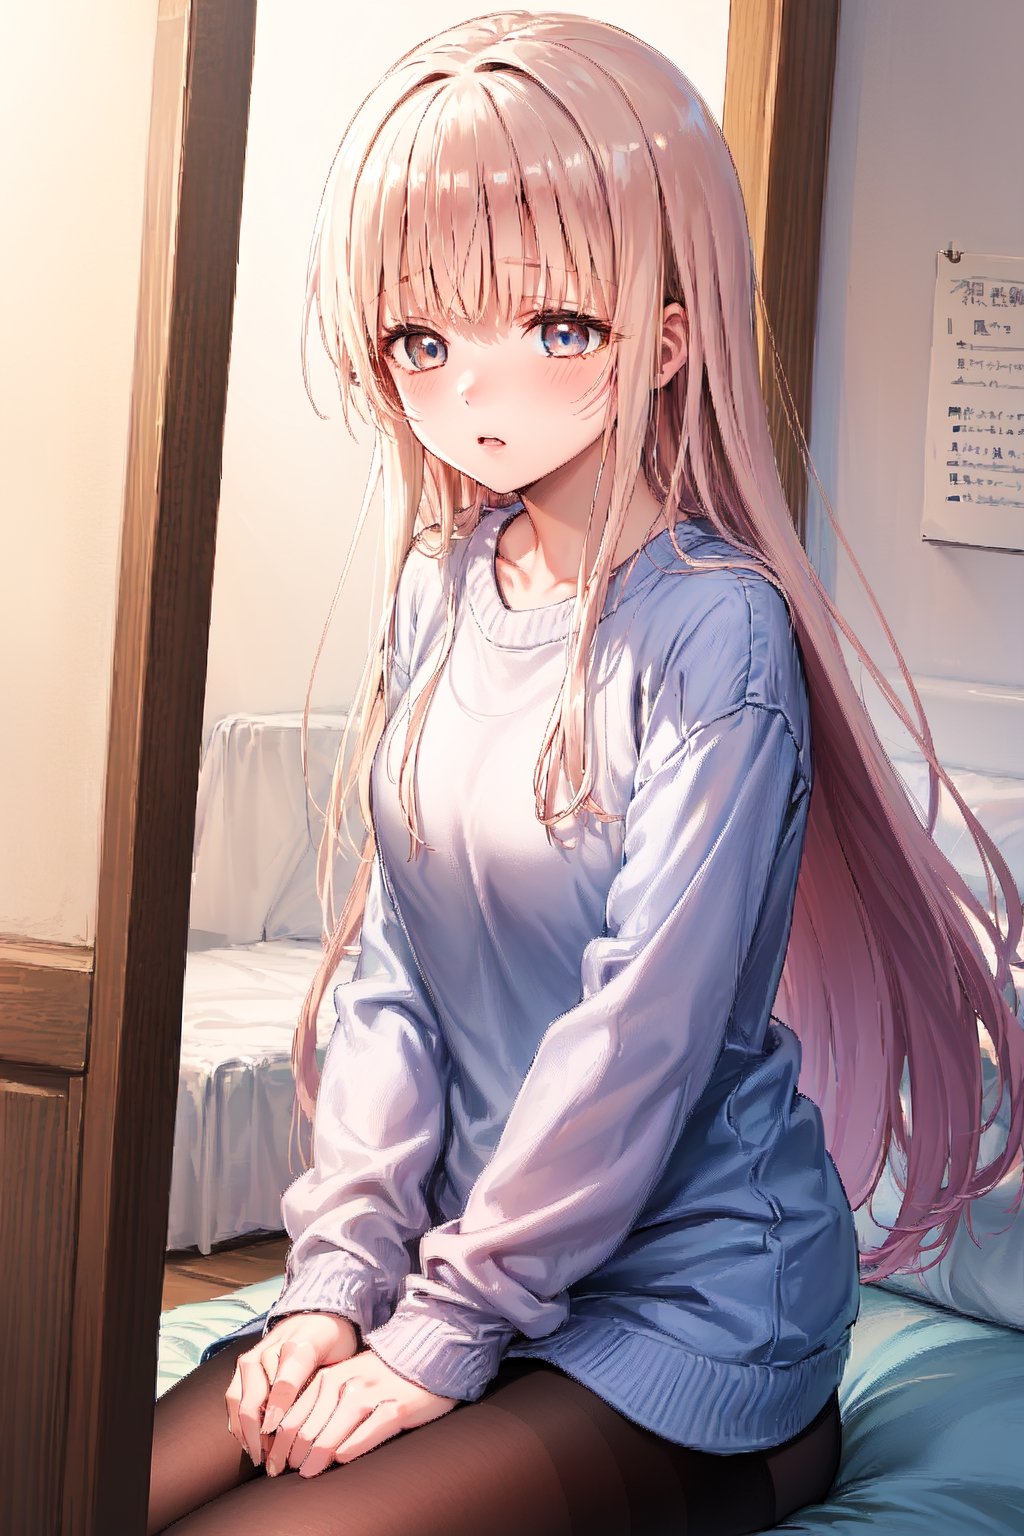 1 girl, otaku, disheveled, with long pink hair, blue eyes, with a lost look, trembling lips, wearing a pink sweatshirt, black pantyhose